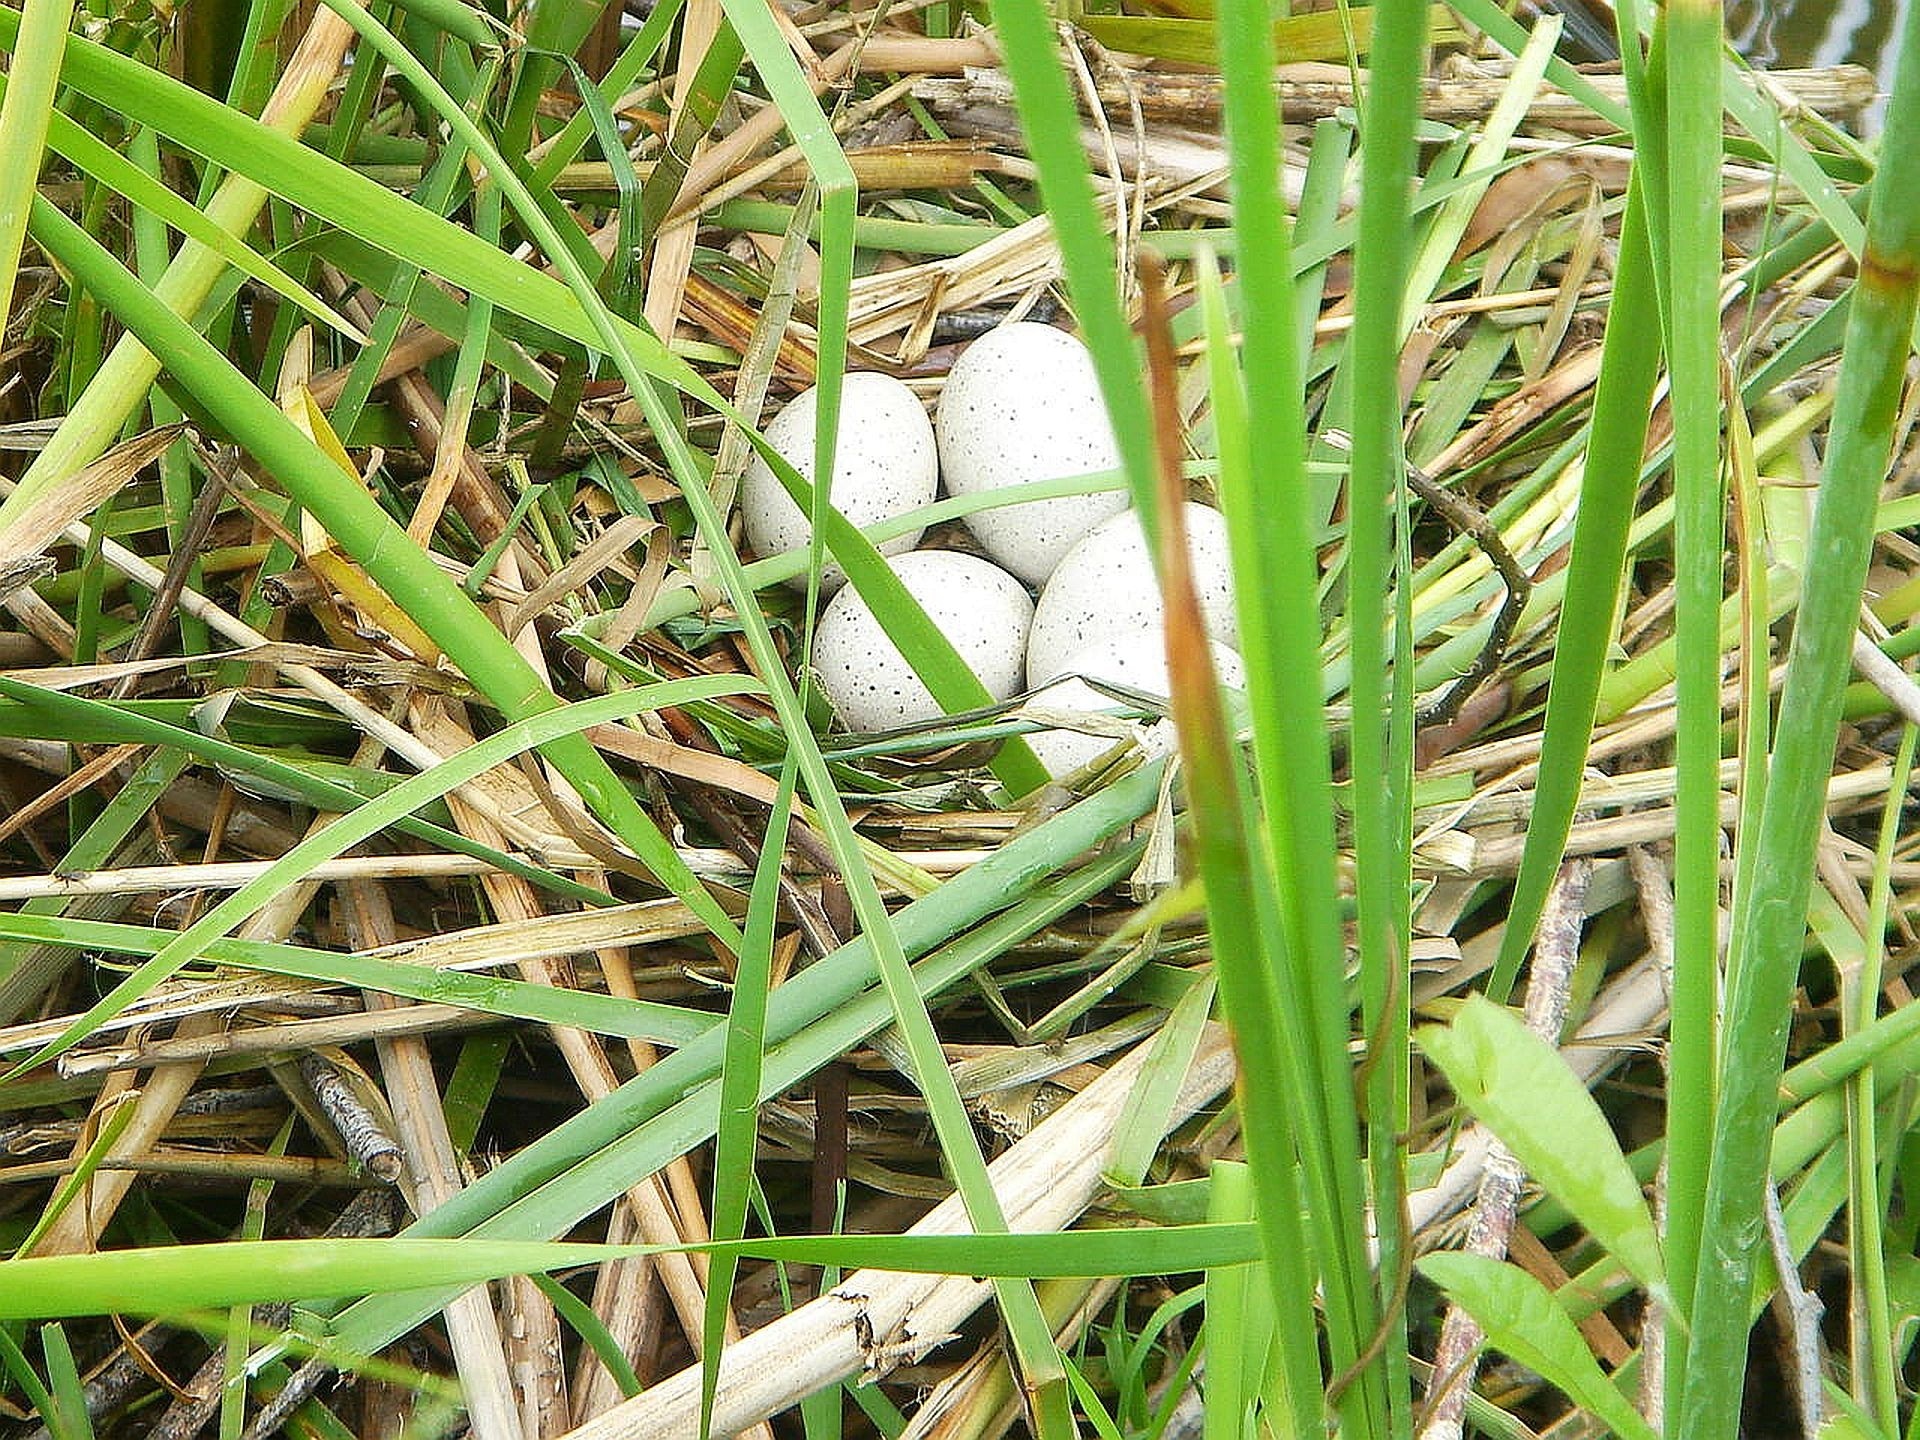 4 white eggs